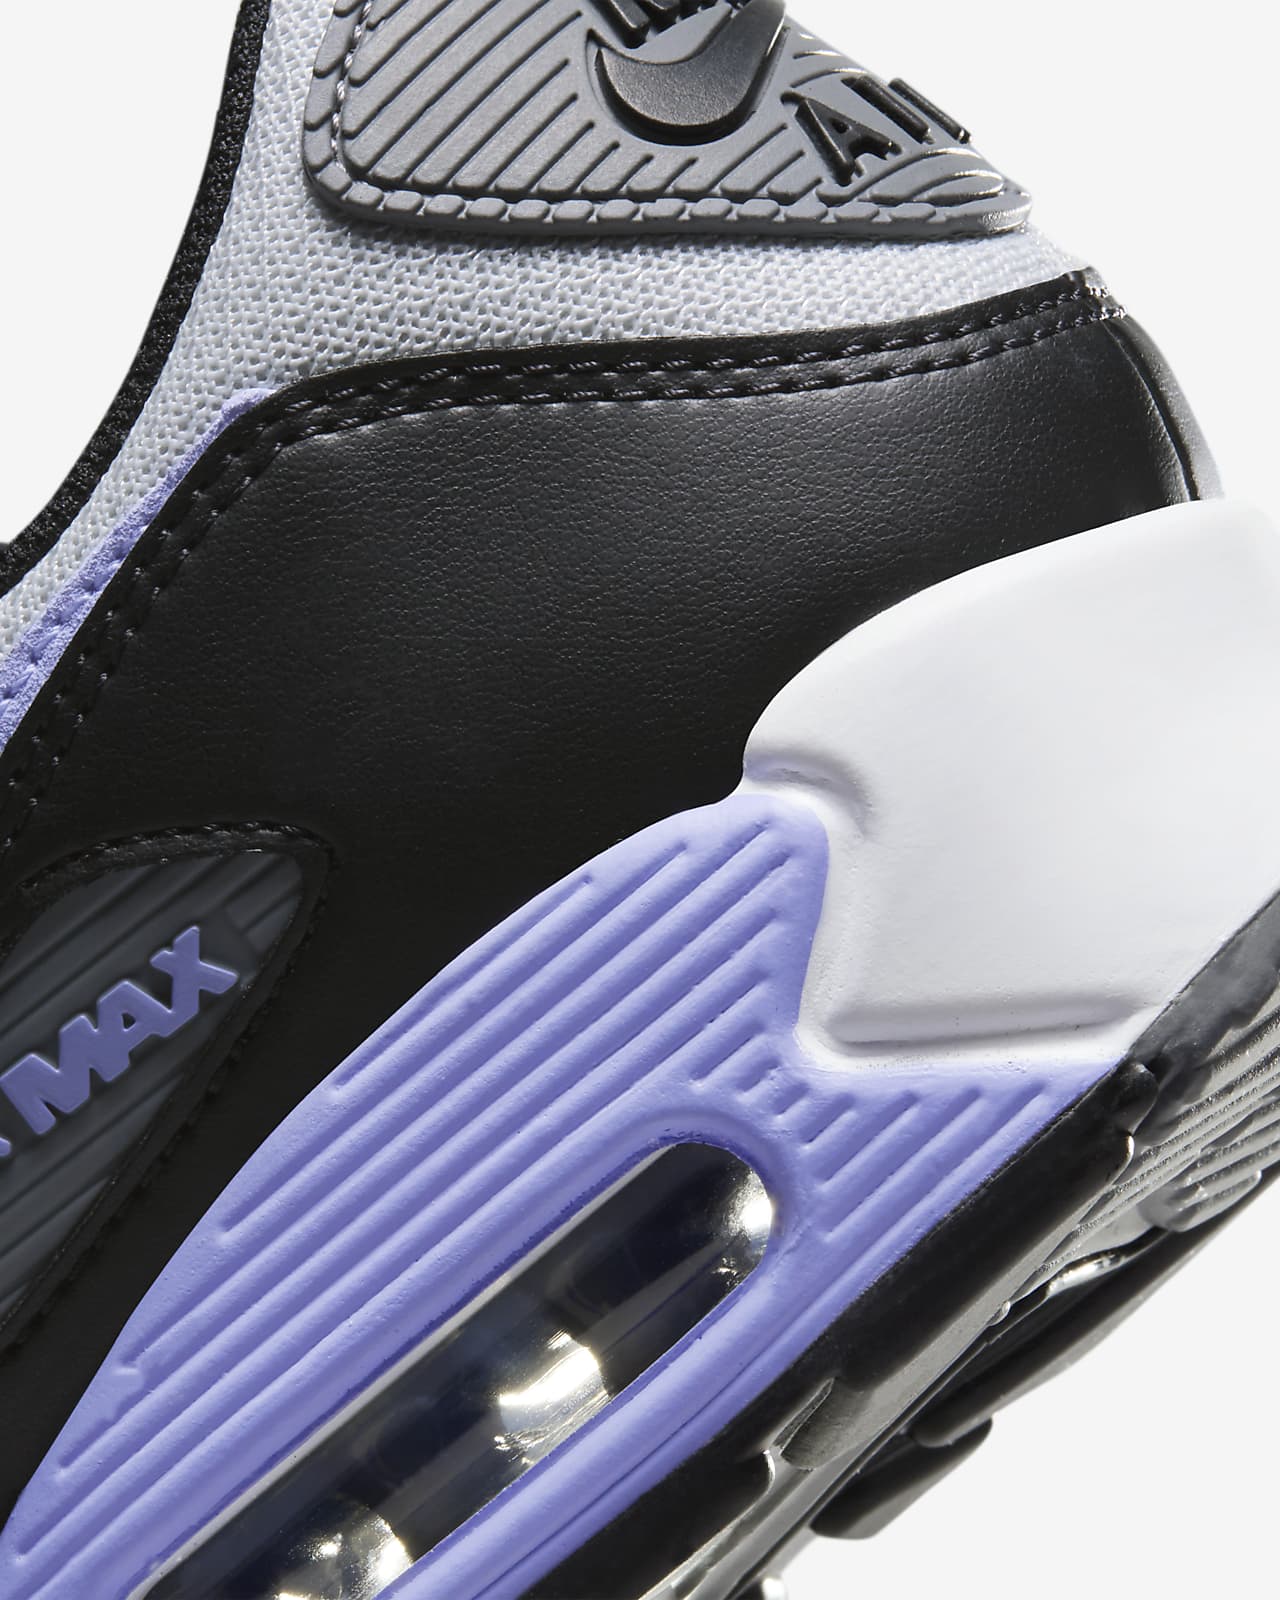 Zapatillas Nike Air Max 90 Golf Sportswear Hombre DM9008-179 Blanco talla  7.5 I Oechsle - Oechsle